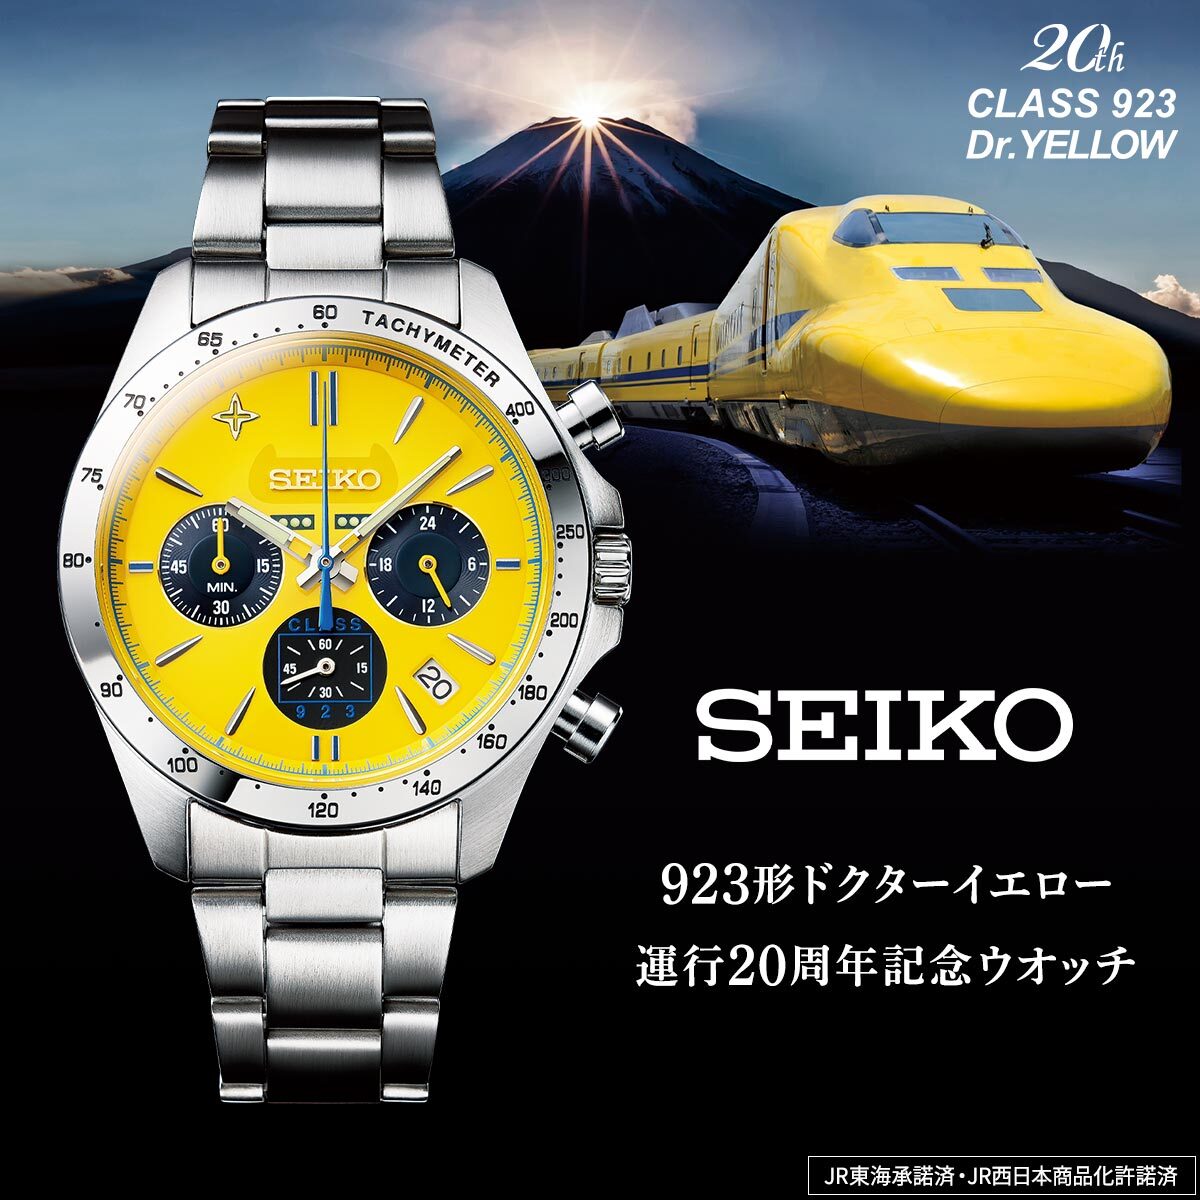 SEIKO 923形ドクターイエロー 運行20周年記念ウオッチ